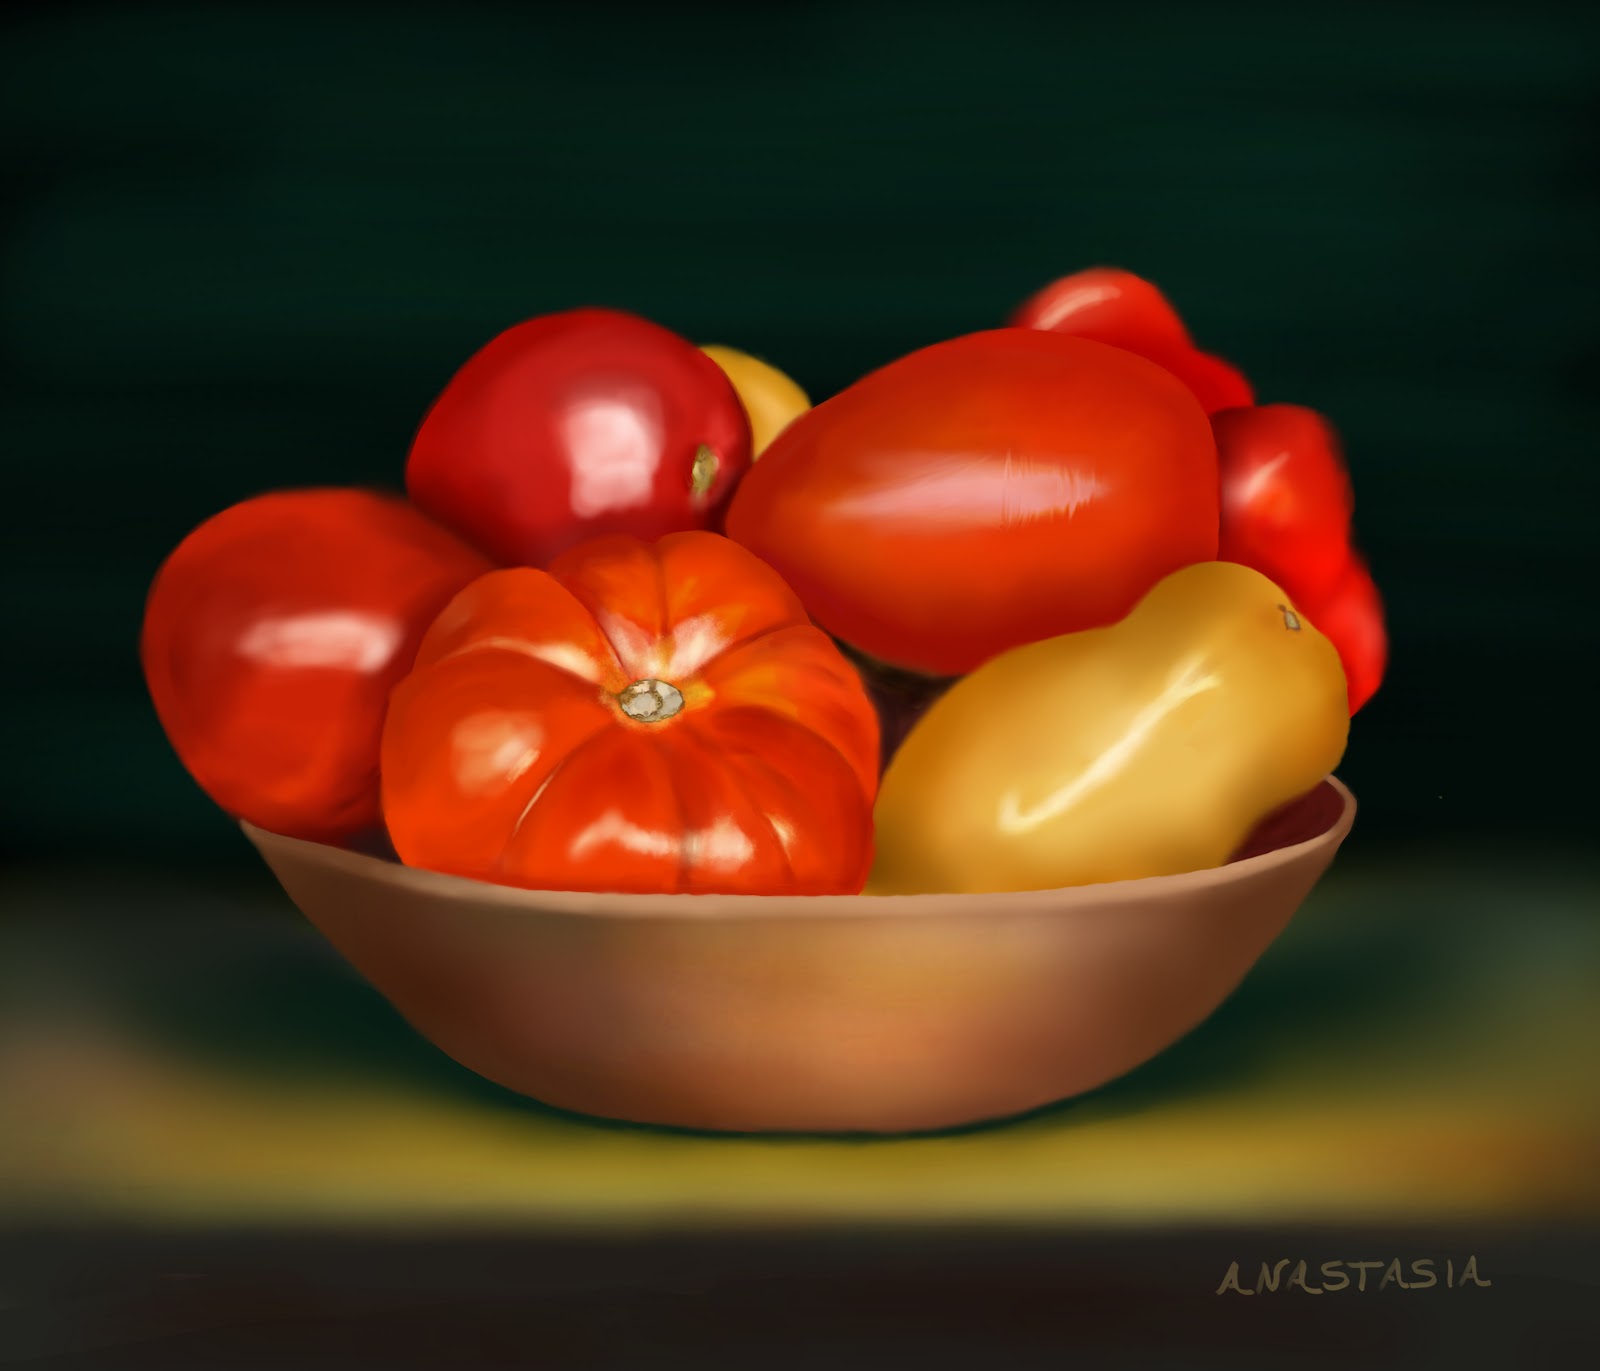 Luscious Tomatoes